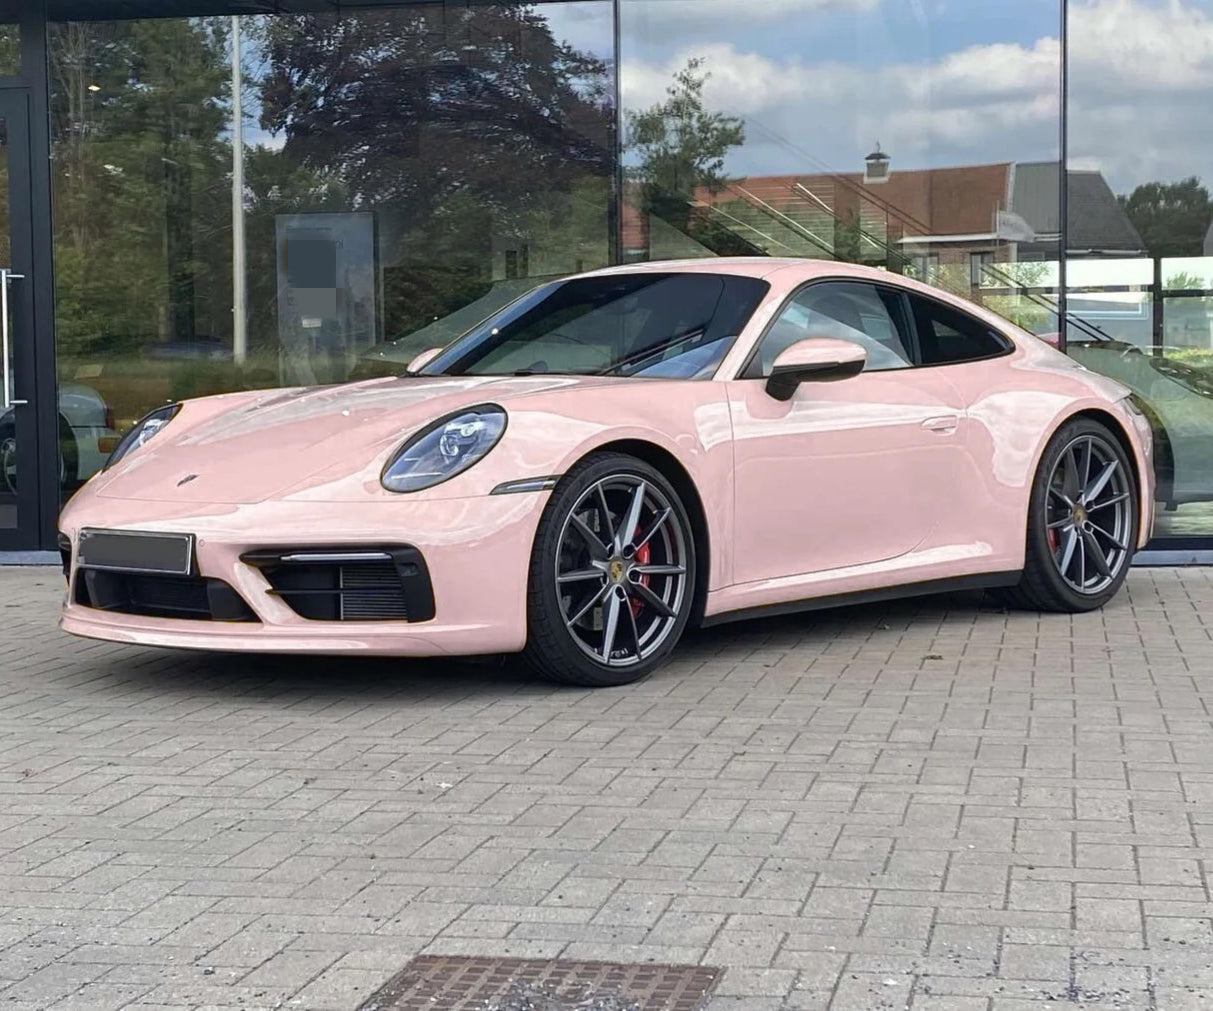 Super Gloss Pearl Pink Car Wrap